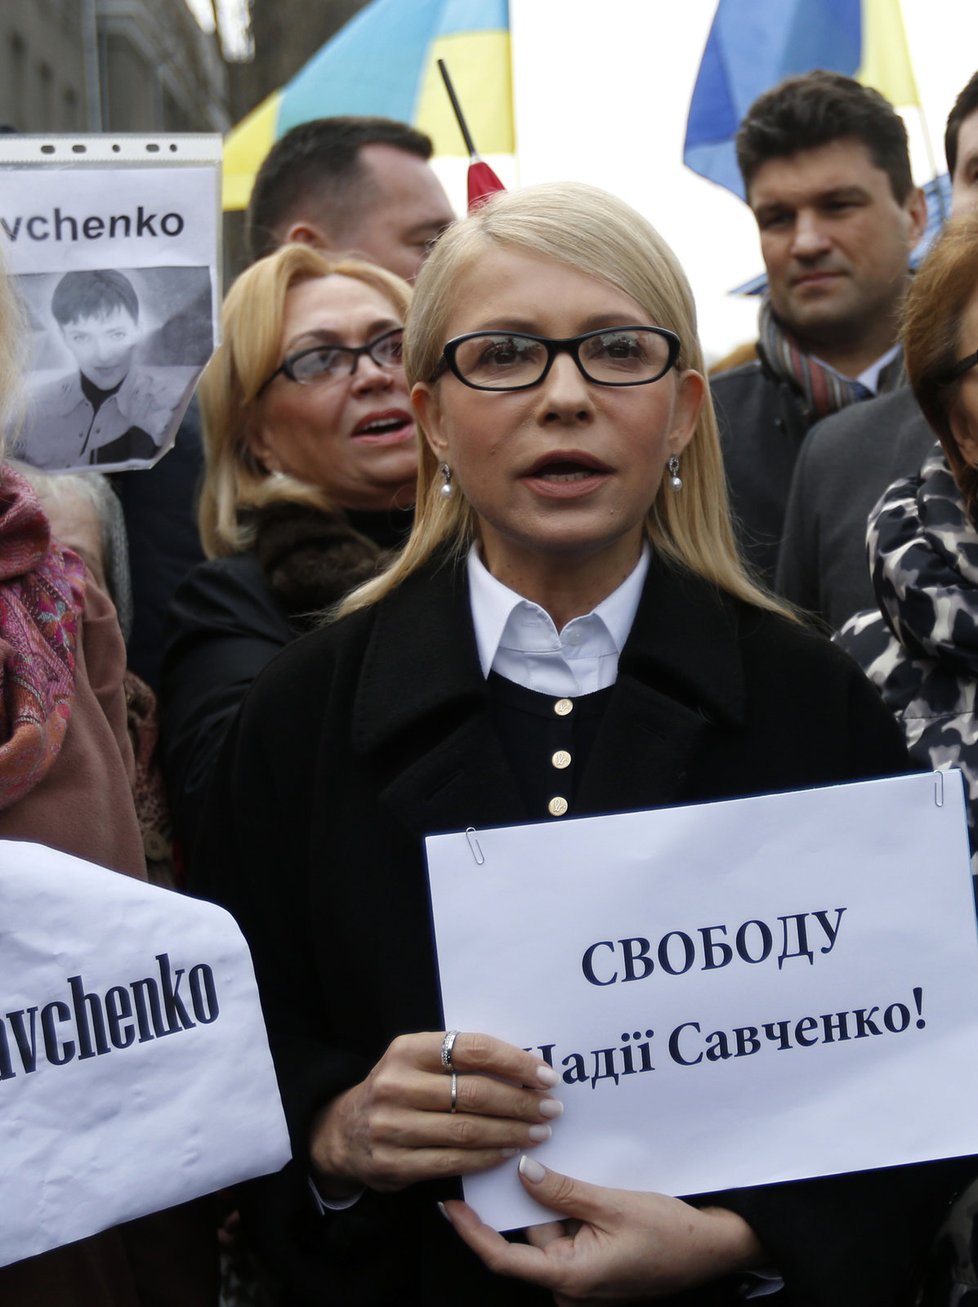 Ukrajinská politička Julija Tymošenková na protestu na podporu pilotky Savčenkové